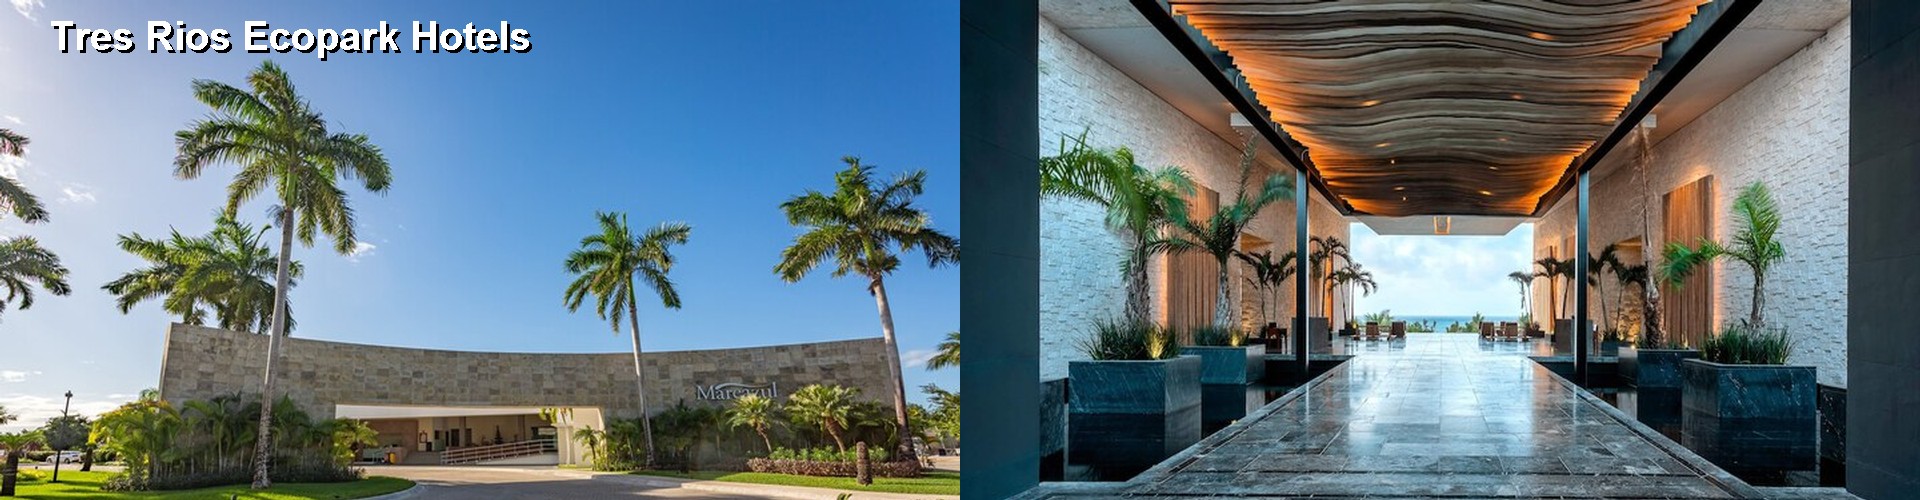 5 Best Hotels near Tres Rios Ecopark